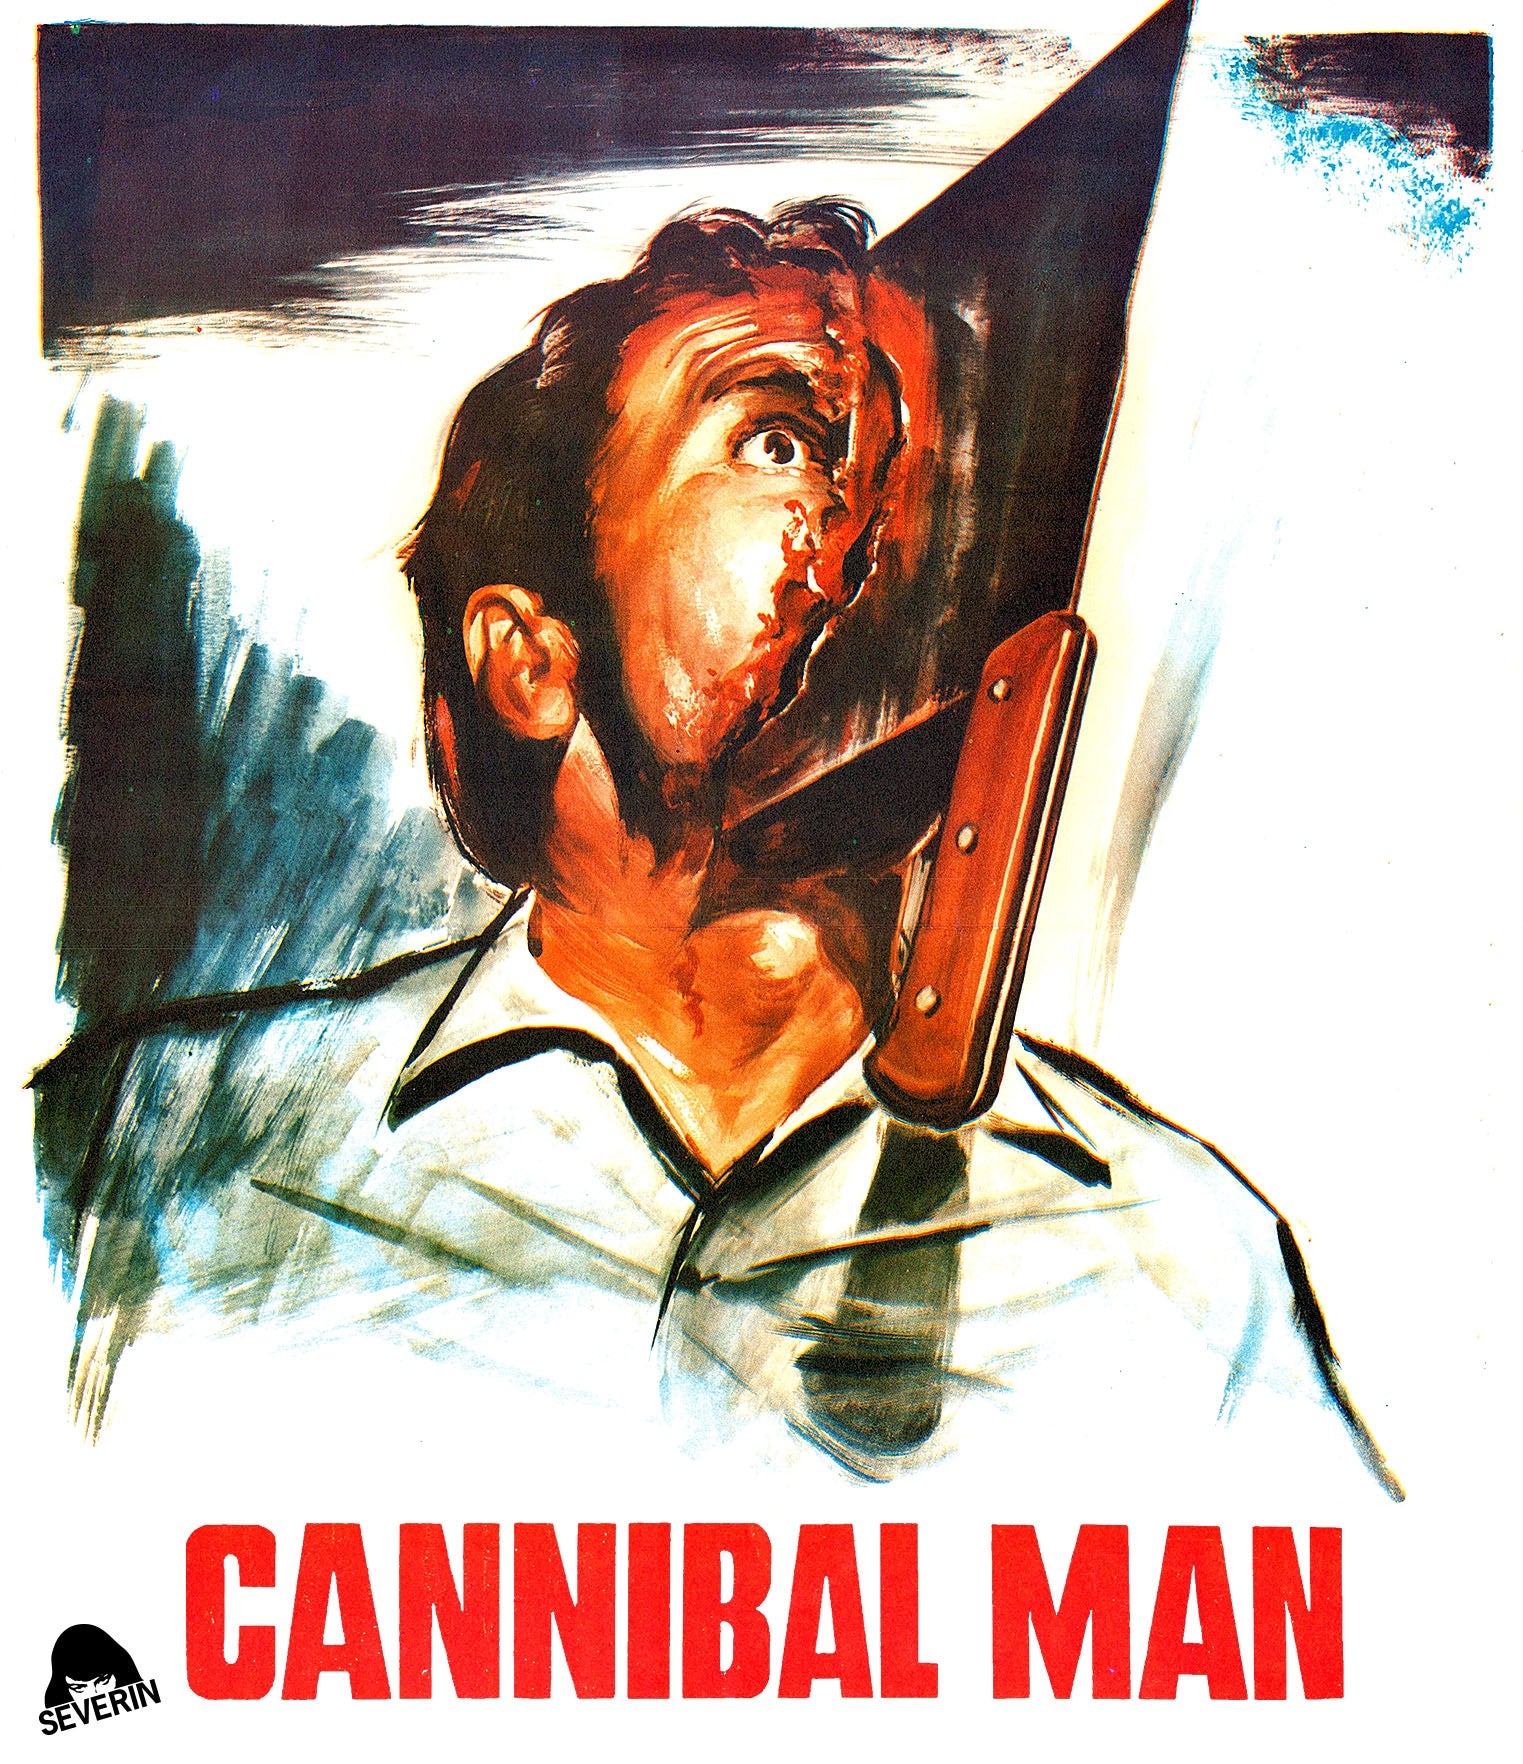 Cannibal Man [Blu-ray] cover art